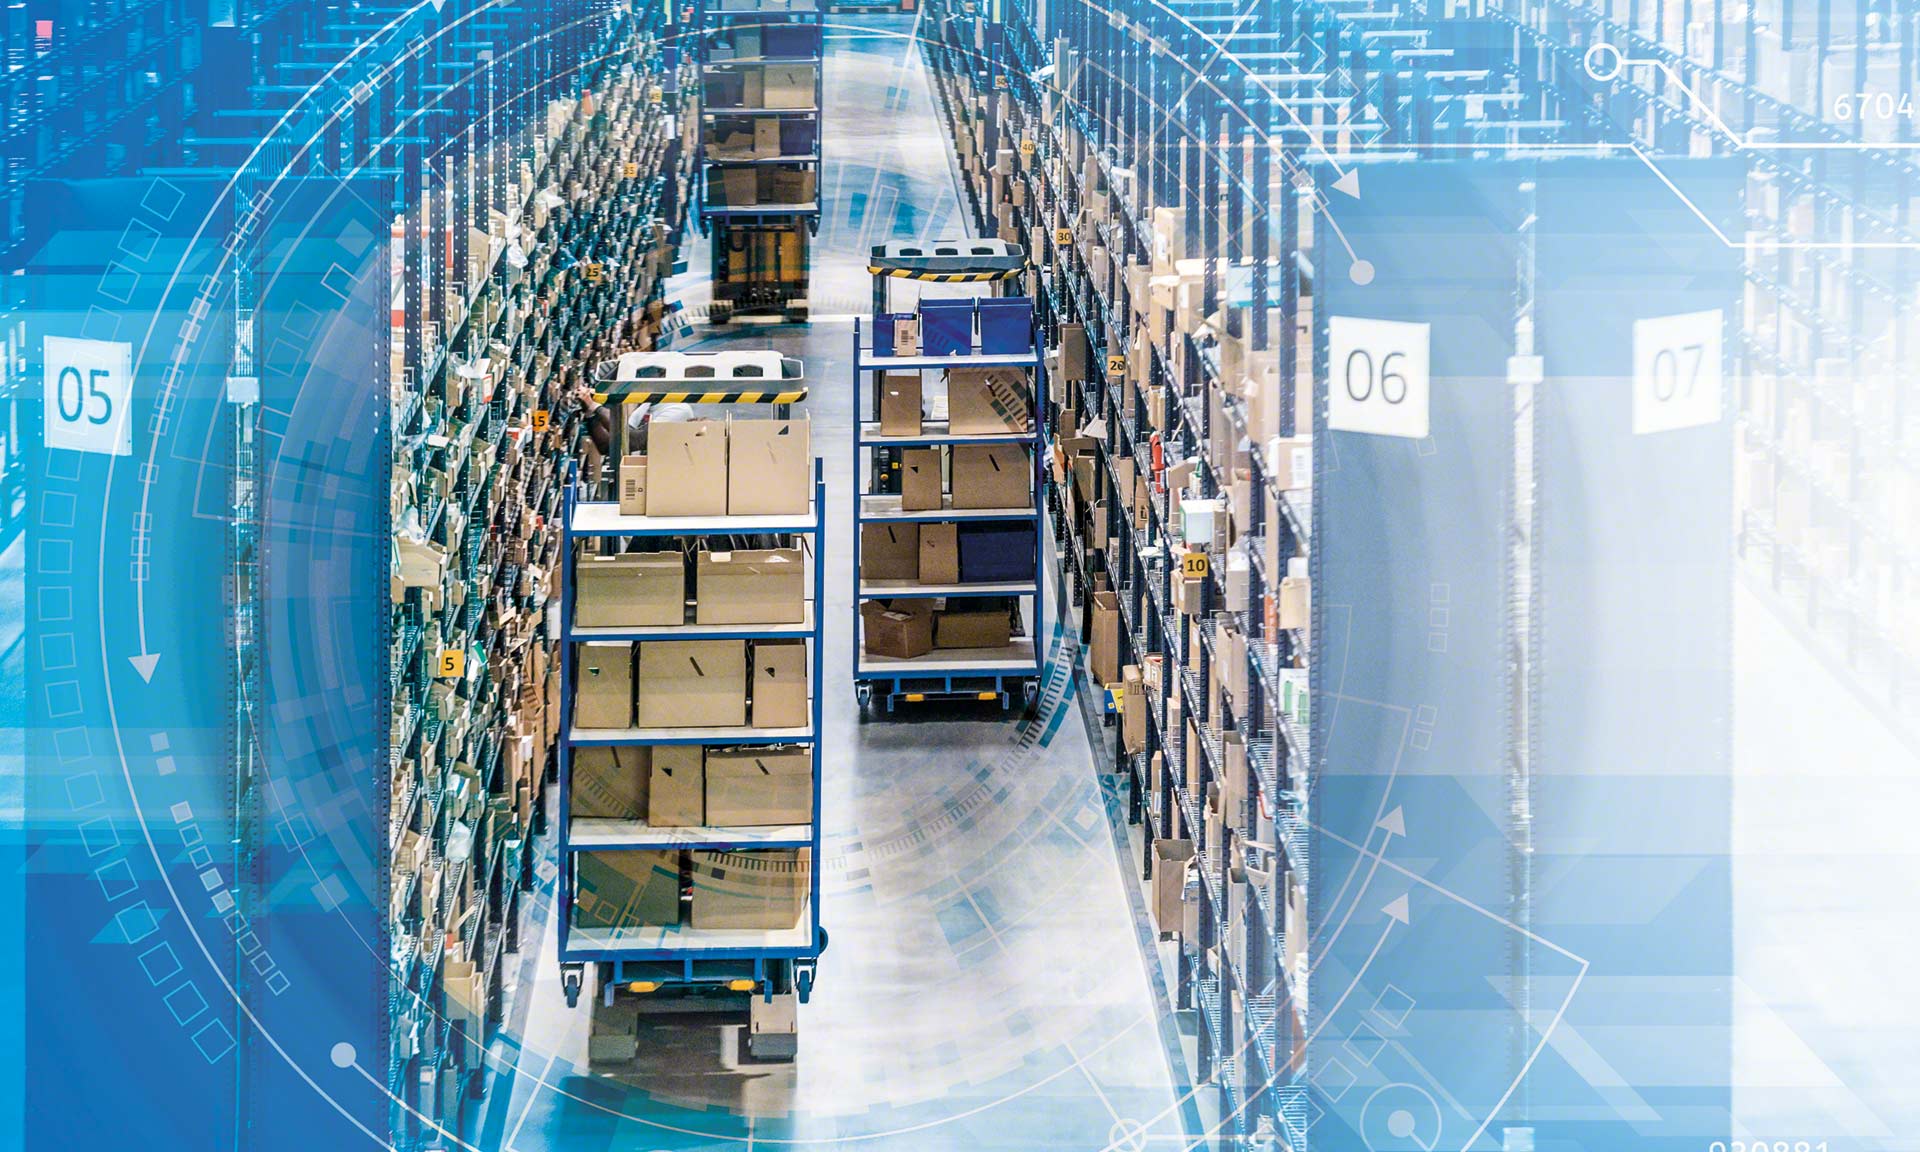 Task interleaving is the logistics process of combining tasks on a single warehouse run